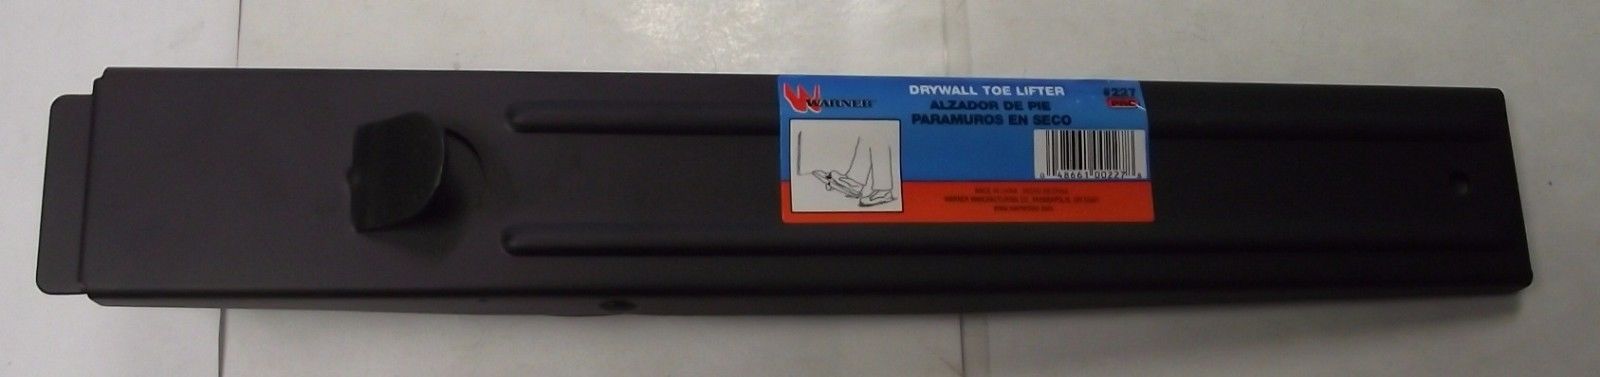 Warner 227 Pro Drywall Toe Lifter